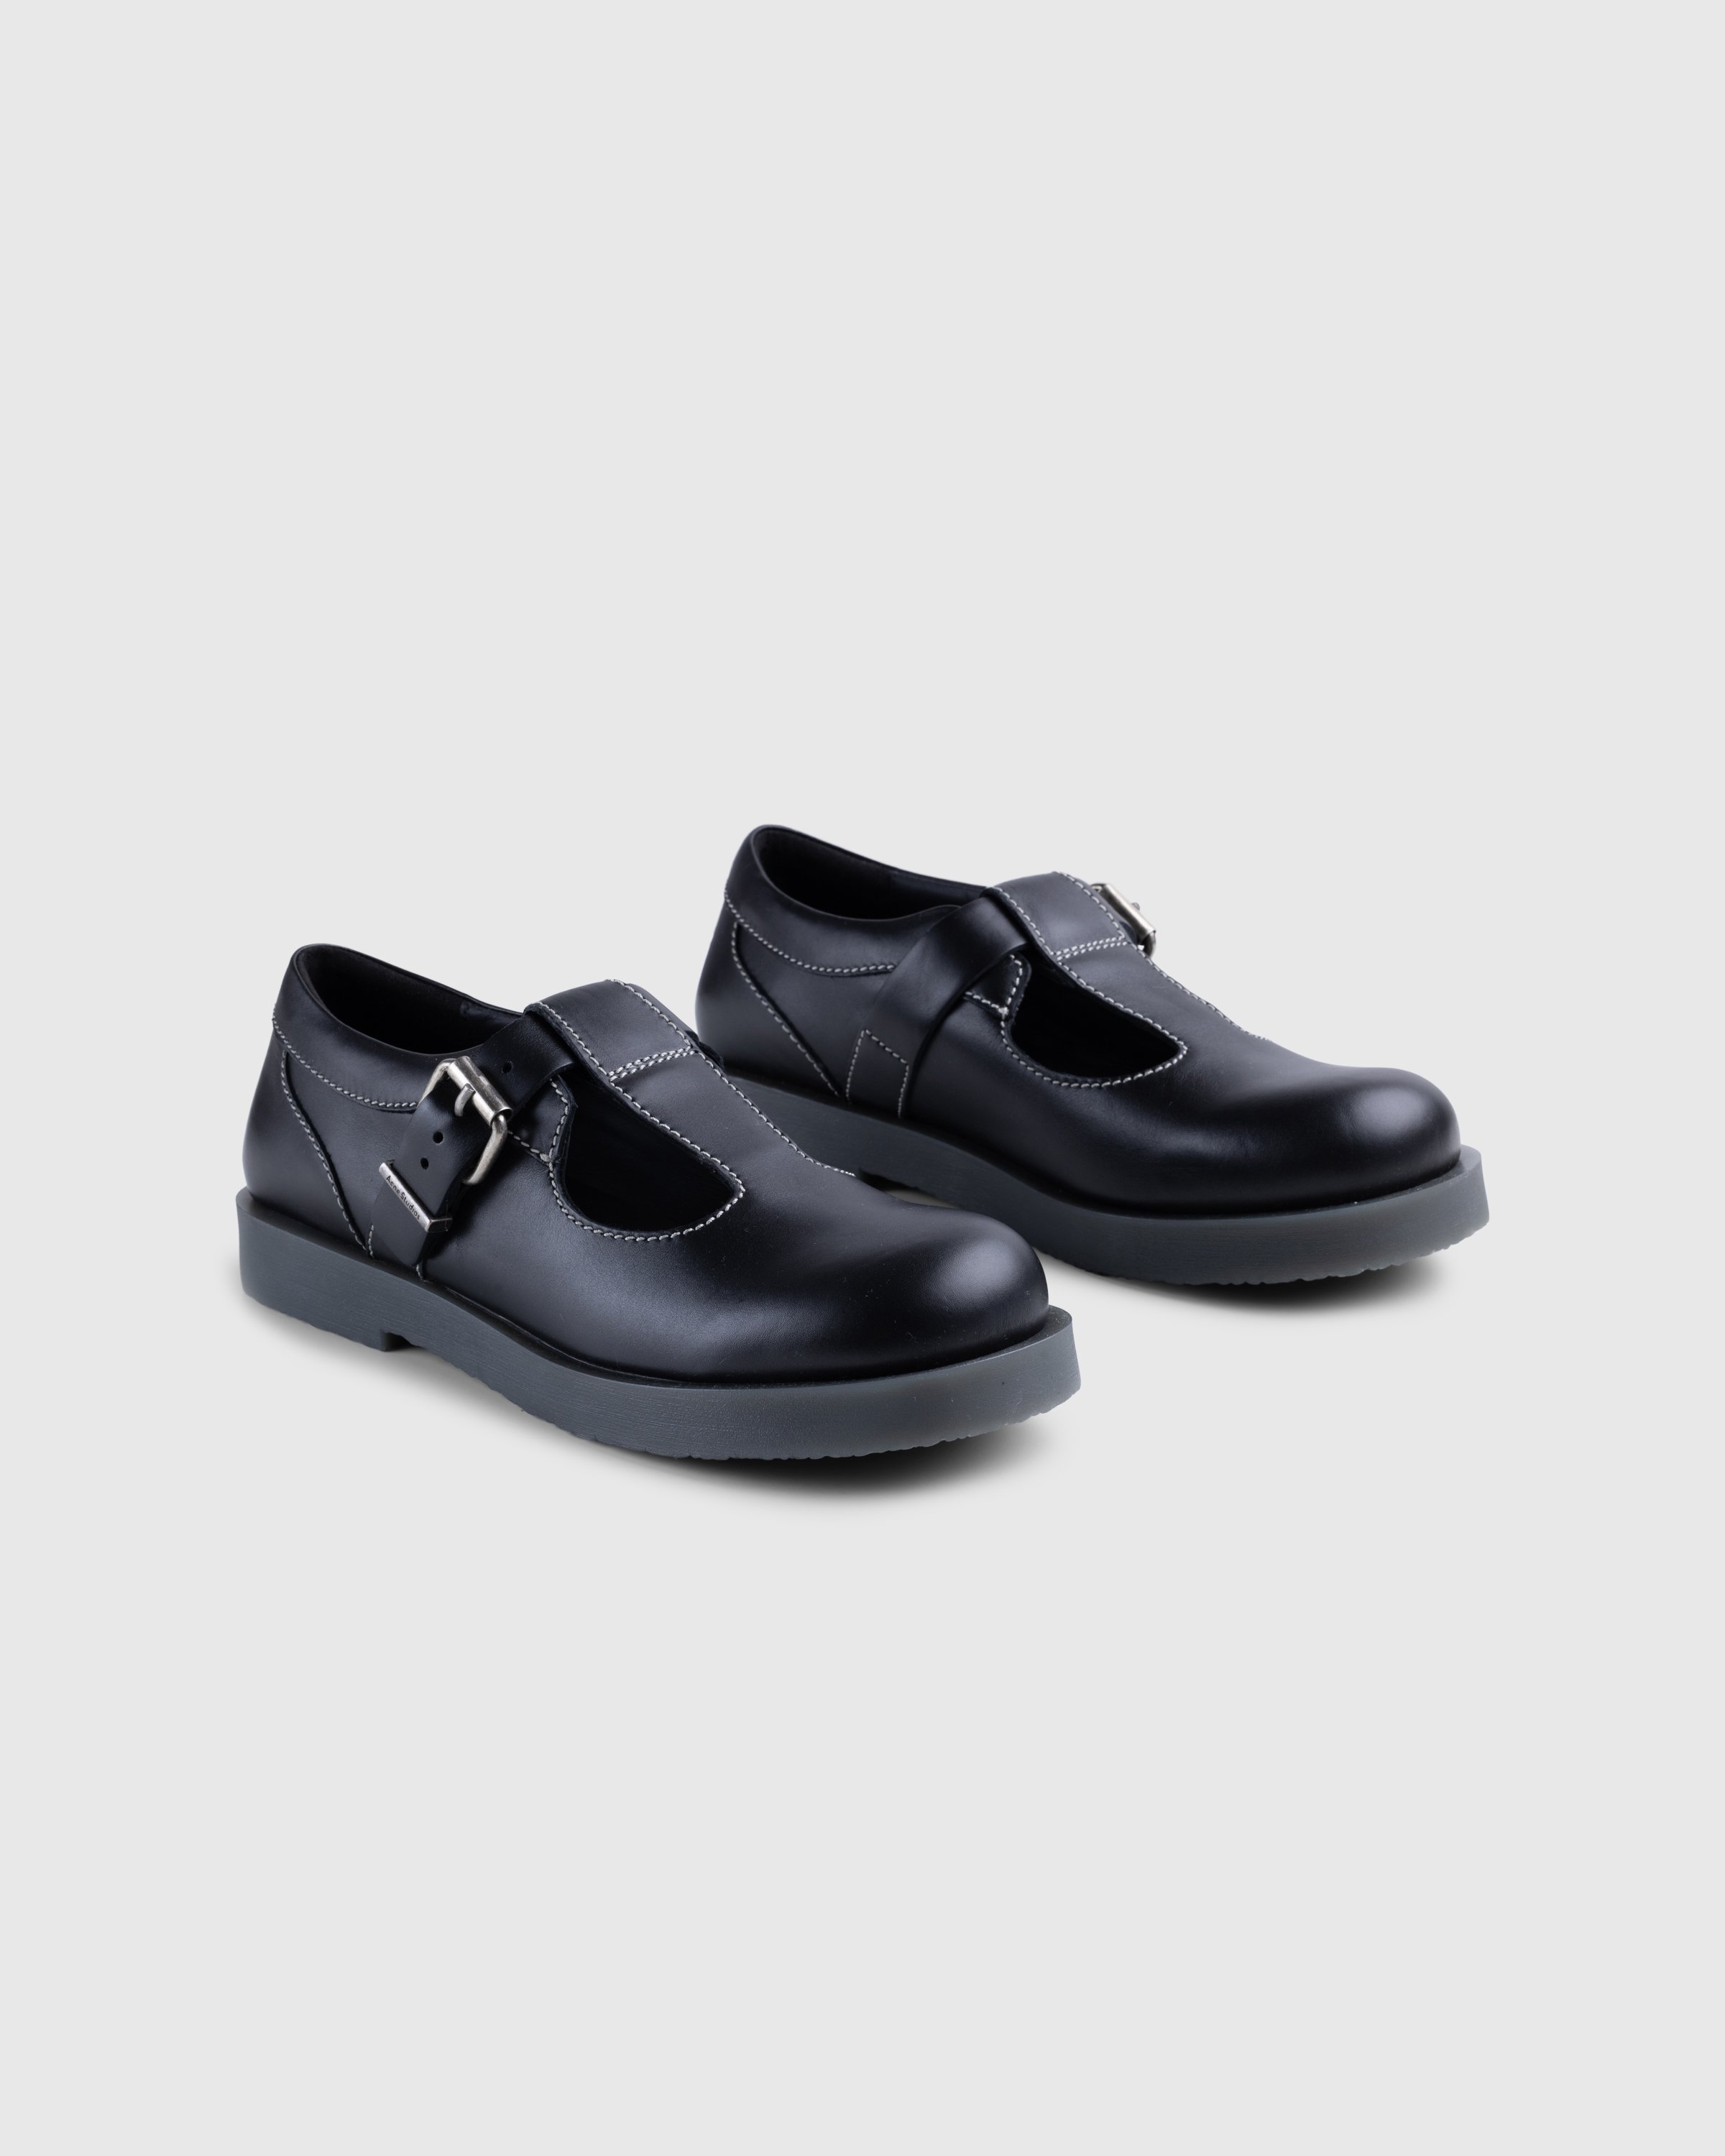 Acne Studios - Berylab Leather Buckle Shoes Black - Footwear - Black - Image 3